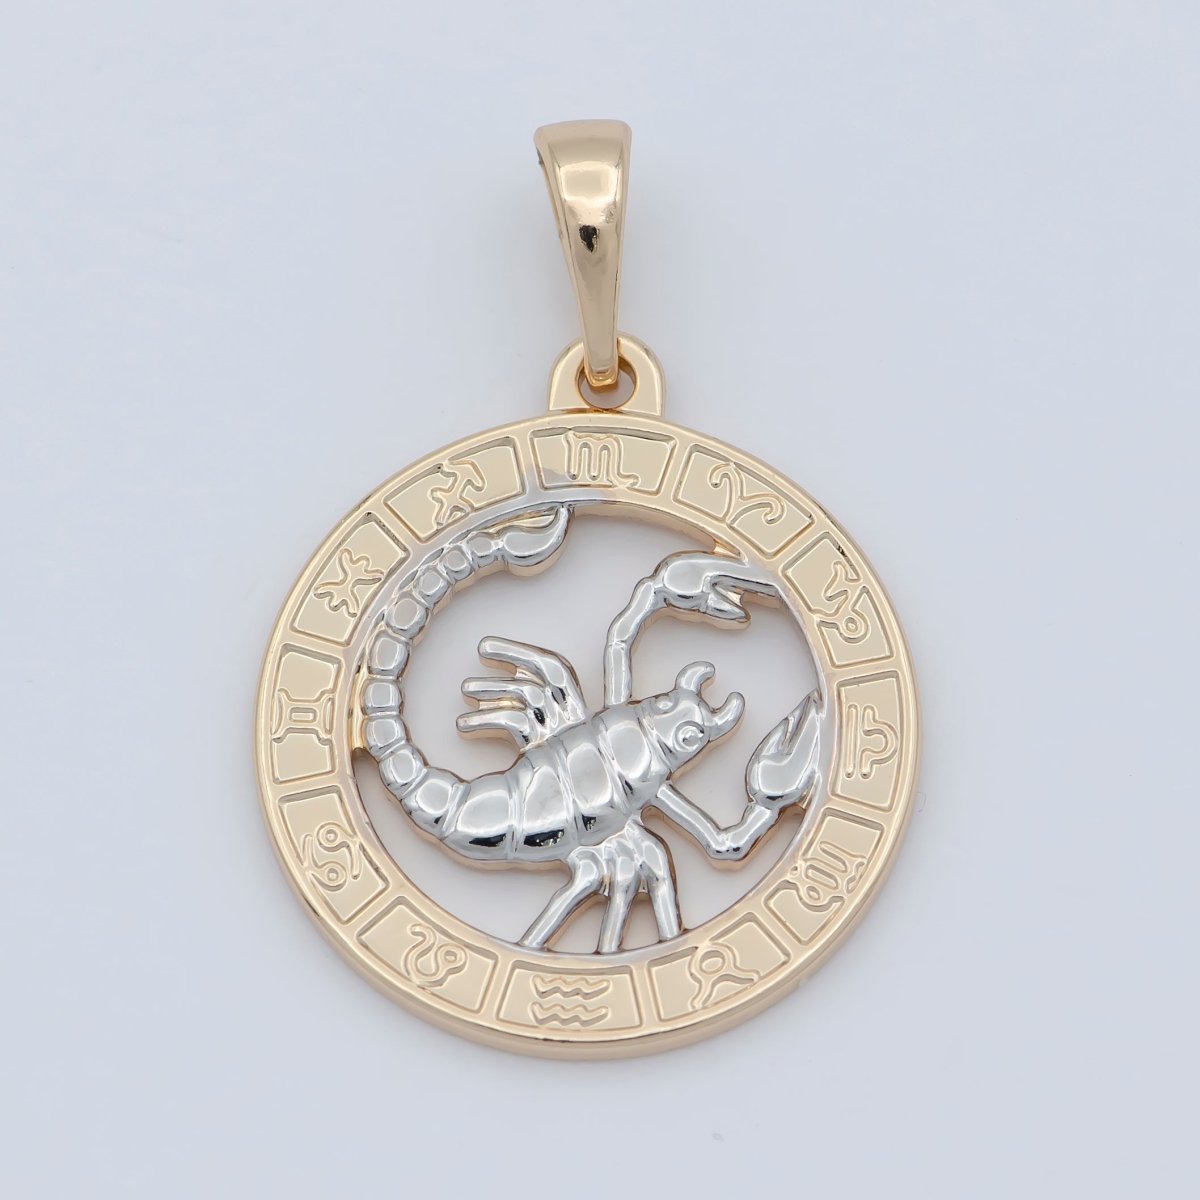 Scorpion Charm 2tone color 18k Gold Filled Pendant Zodiac Medallion Charm Scorpion Astrology Sign October November Birthday Gift Lover I-055 - DLUXCA